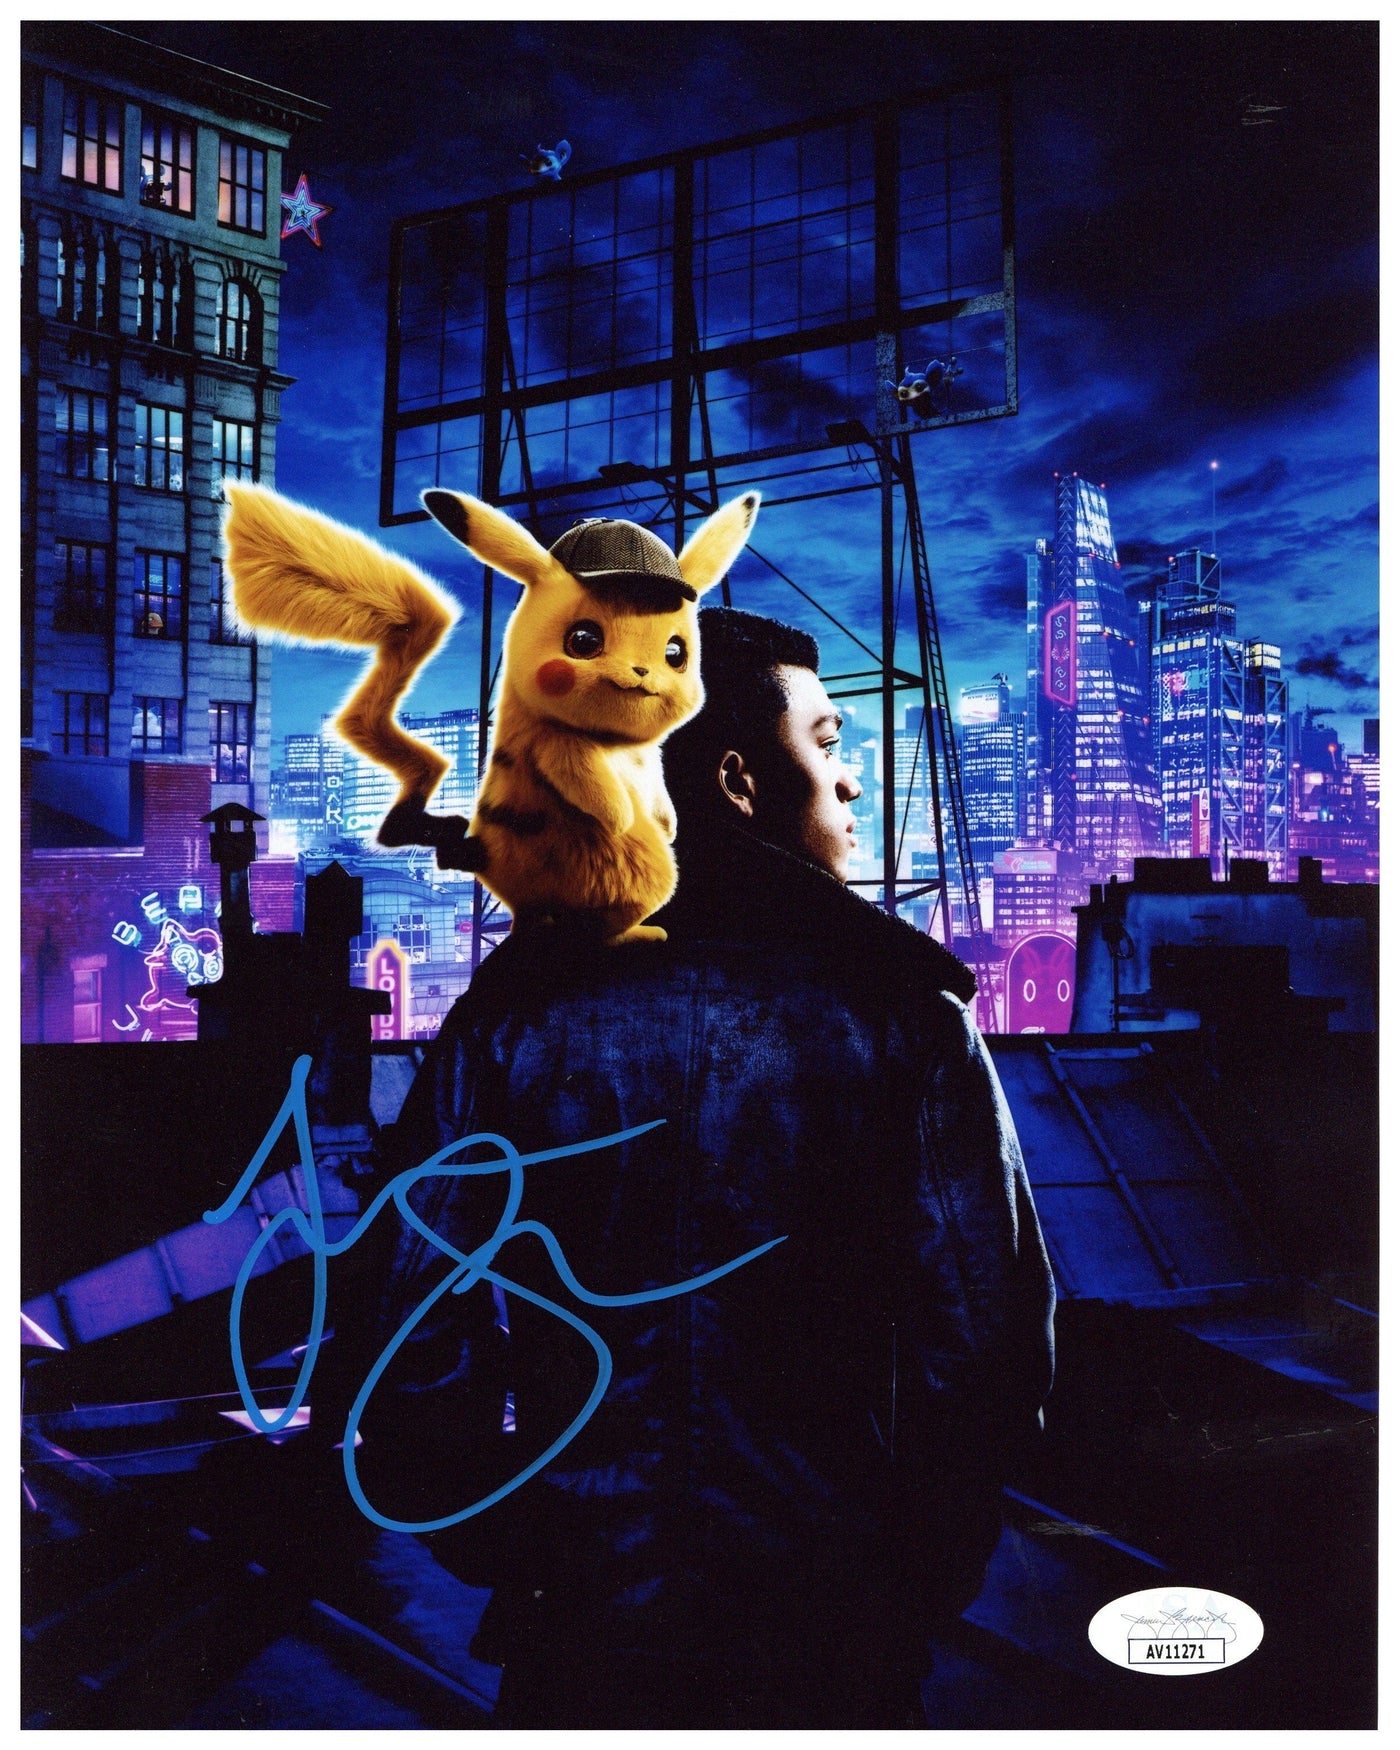 Justice Smith Signed 8x10 Photo Pokemon Authentic Autographed JSA COA